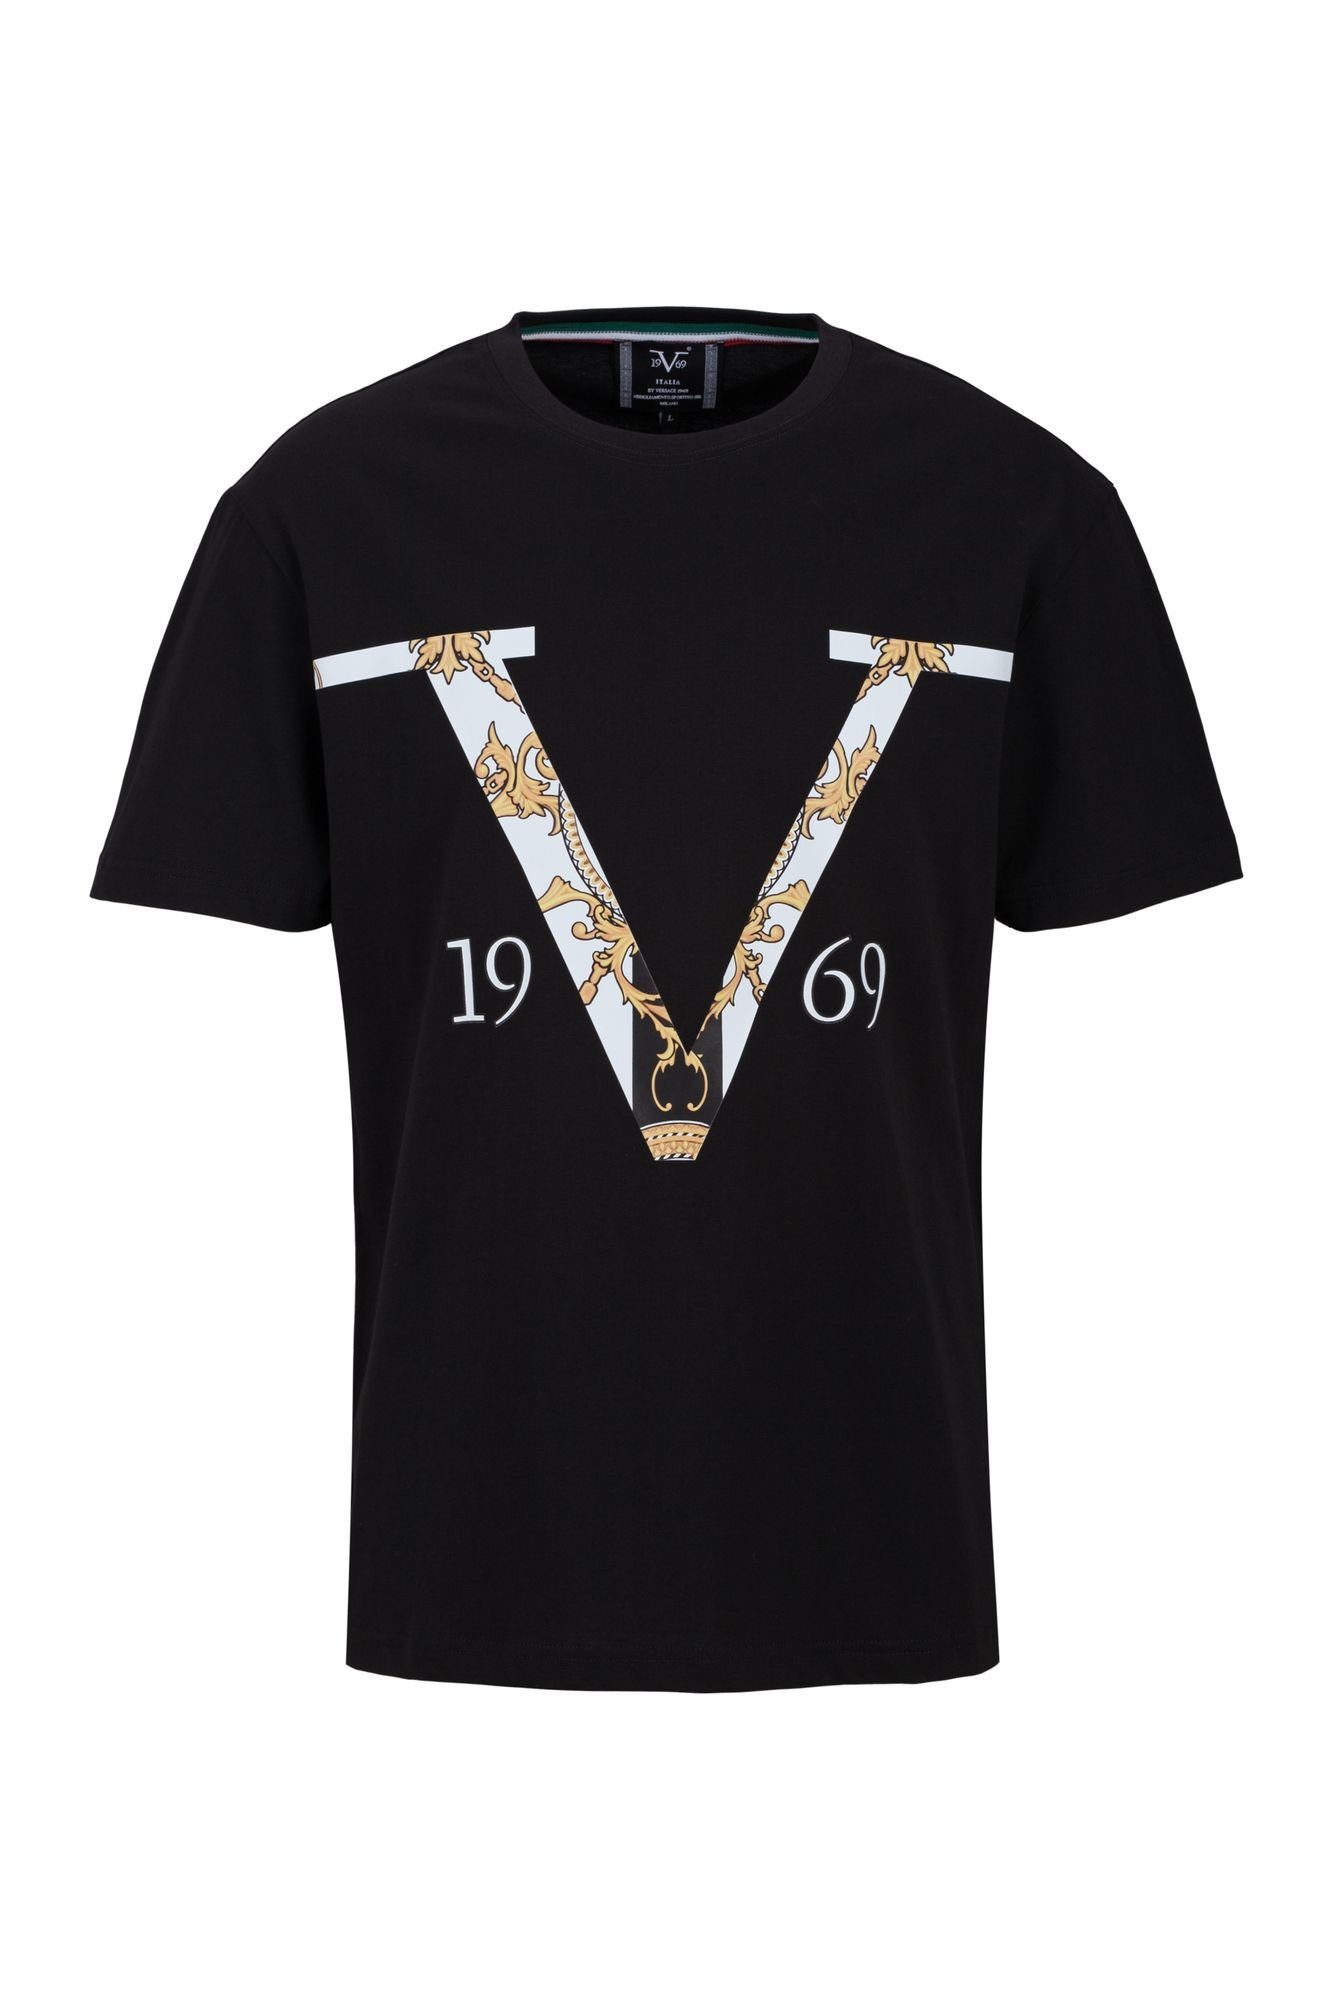 19V69 Italia by Versace T-Shirt by Versace Sportivo SRL - Kiano